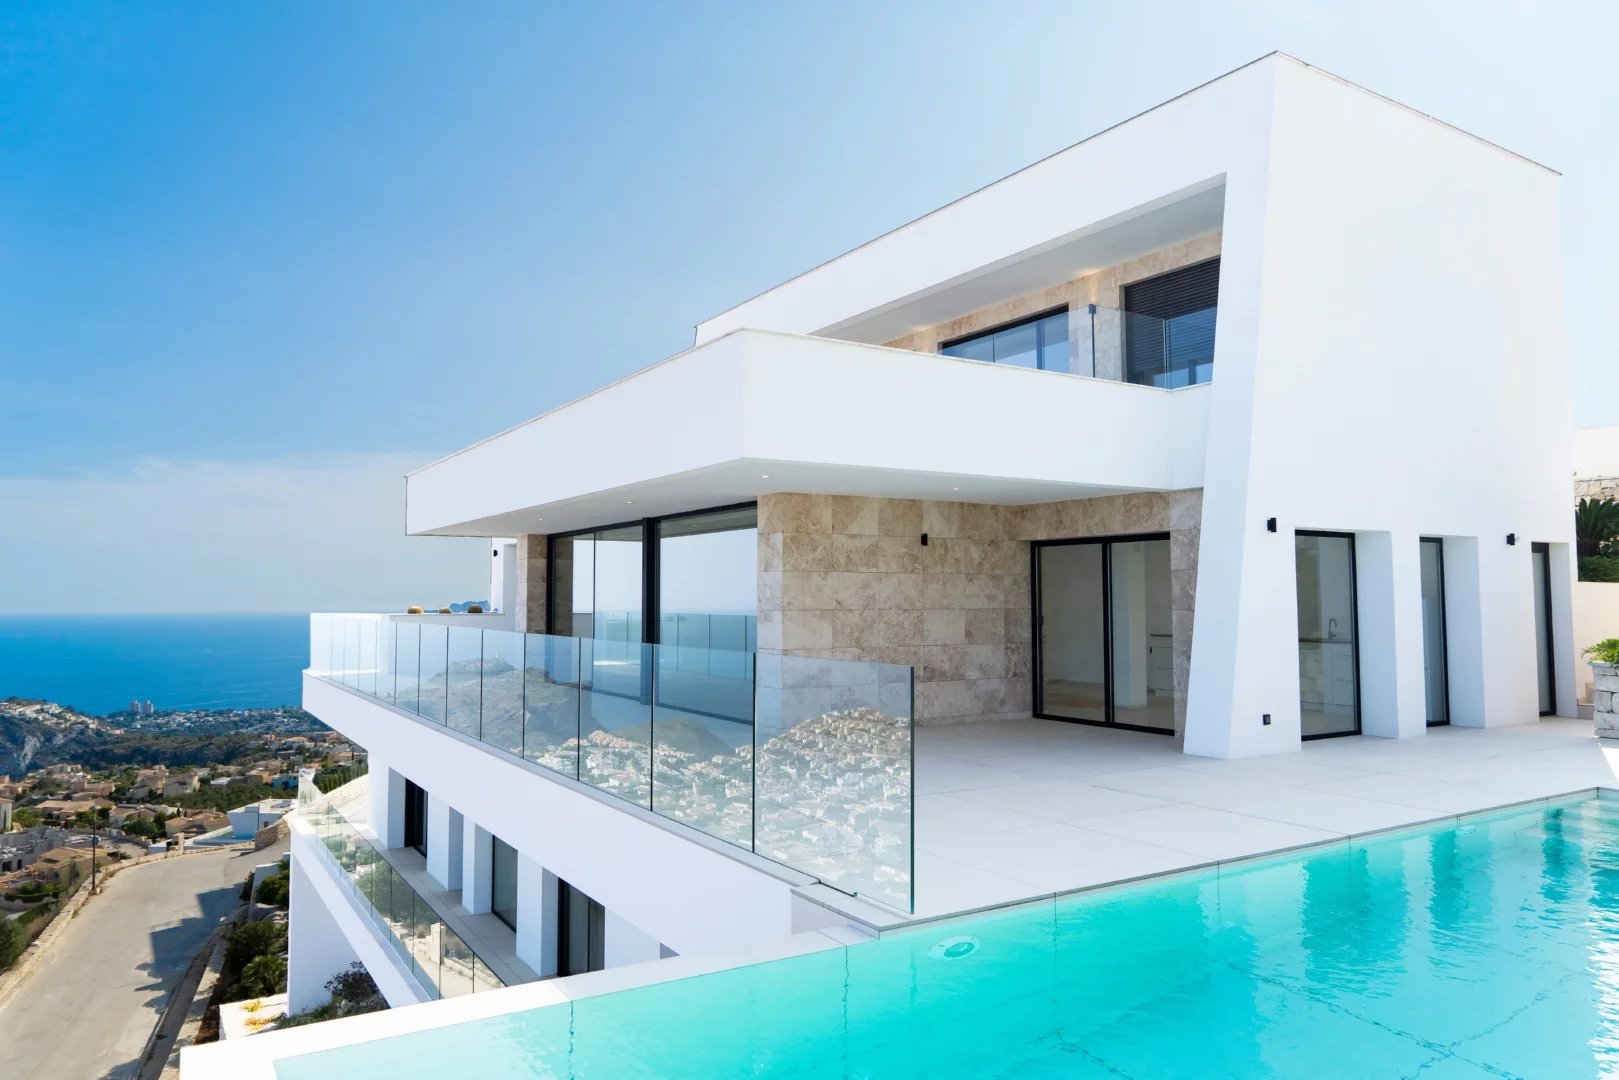 A new build villa as a viewpoint on the Mediterranean Sea